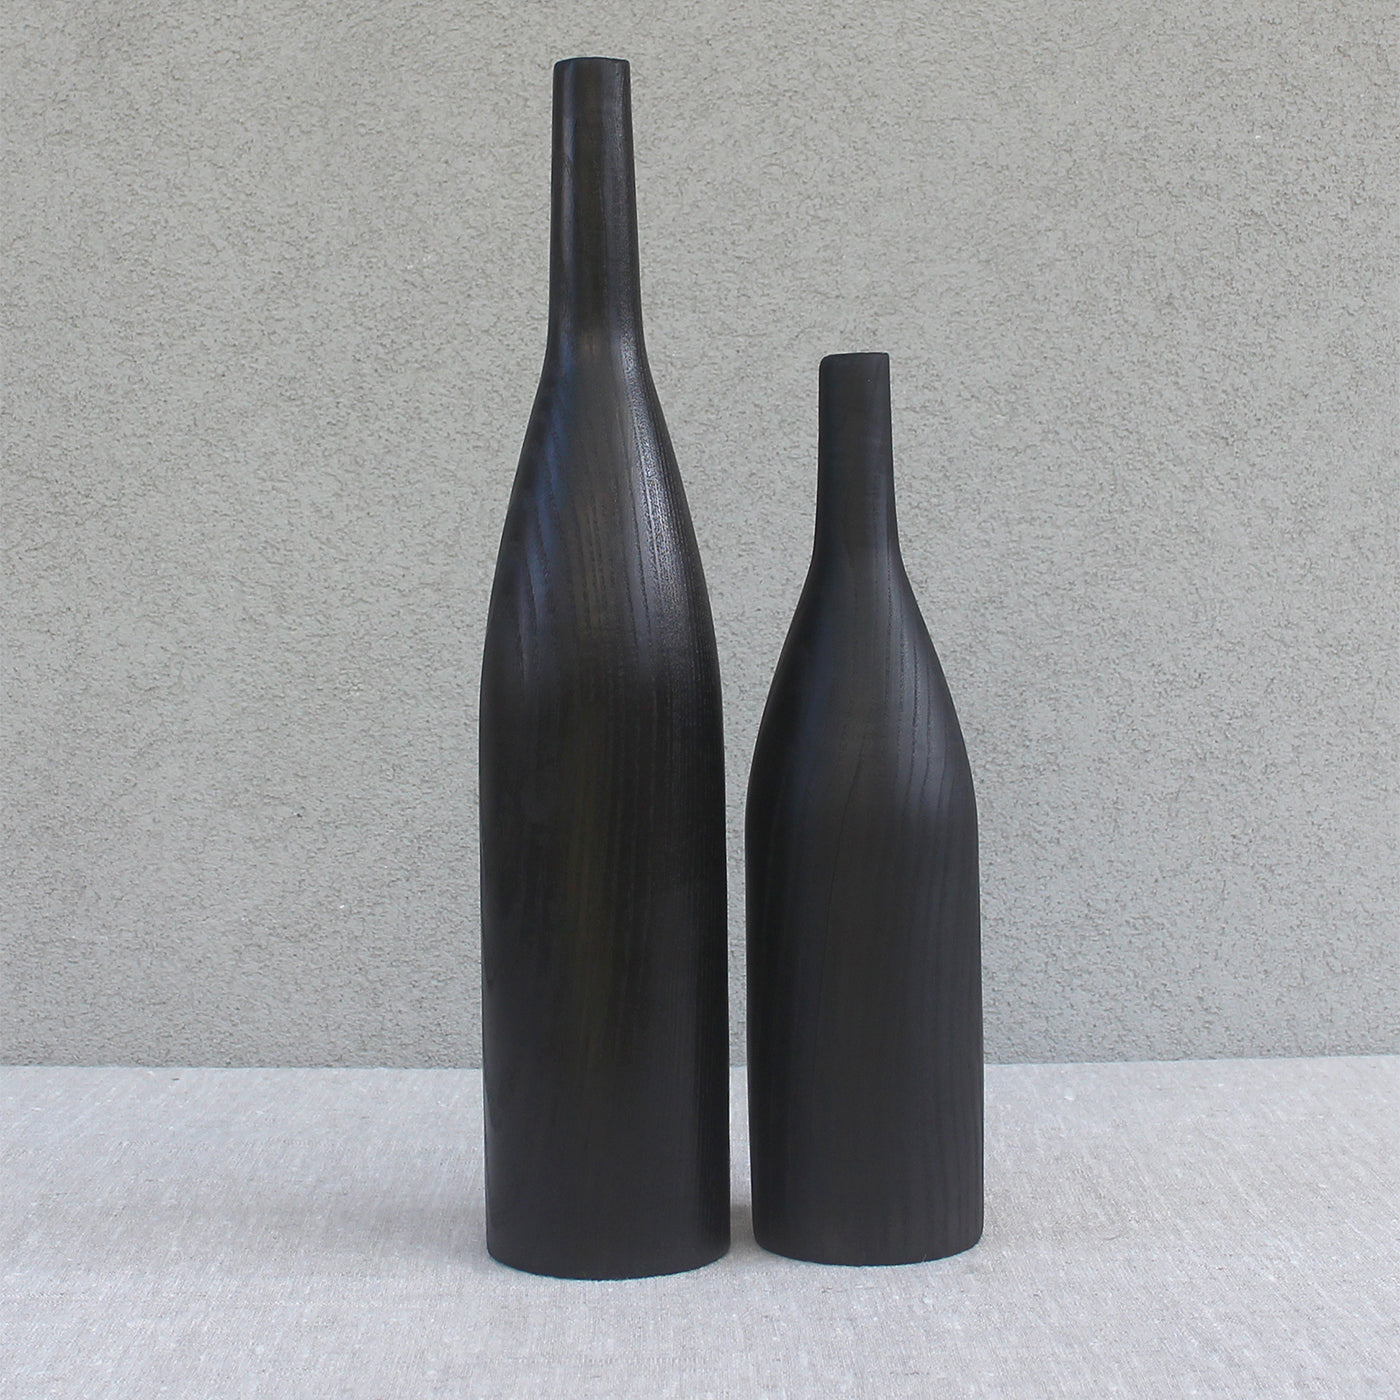 Yakisugi Decorative Bottle #1 - Alternative view 1